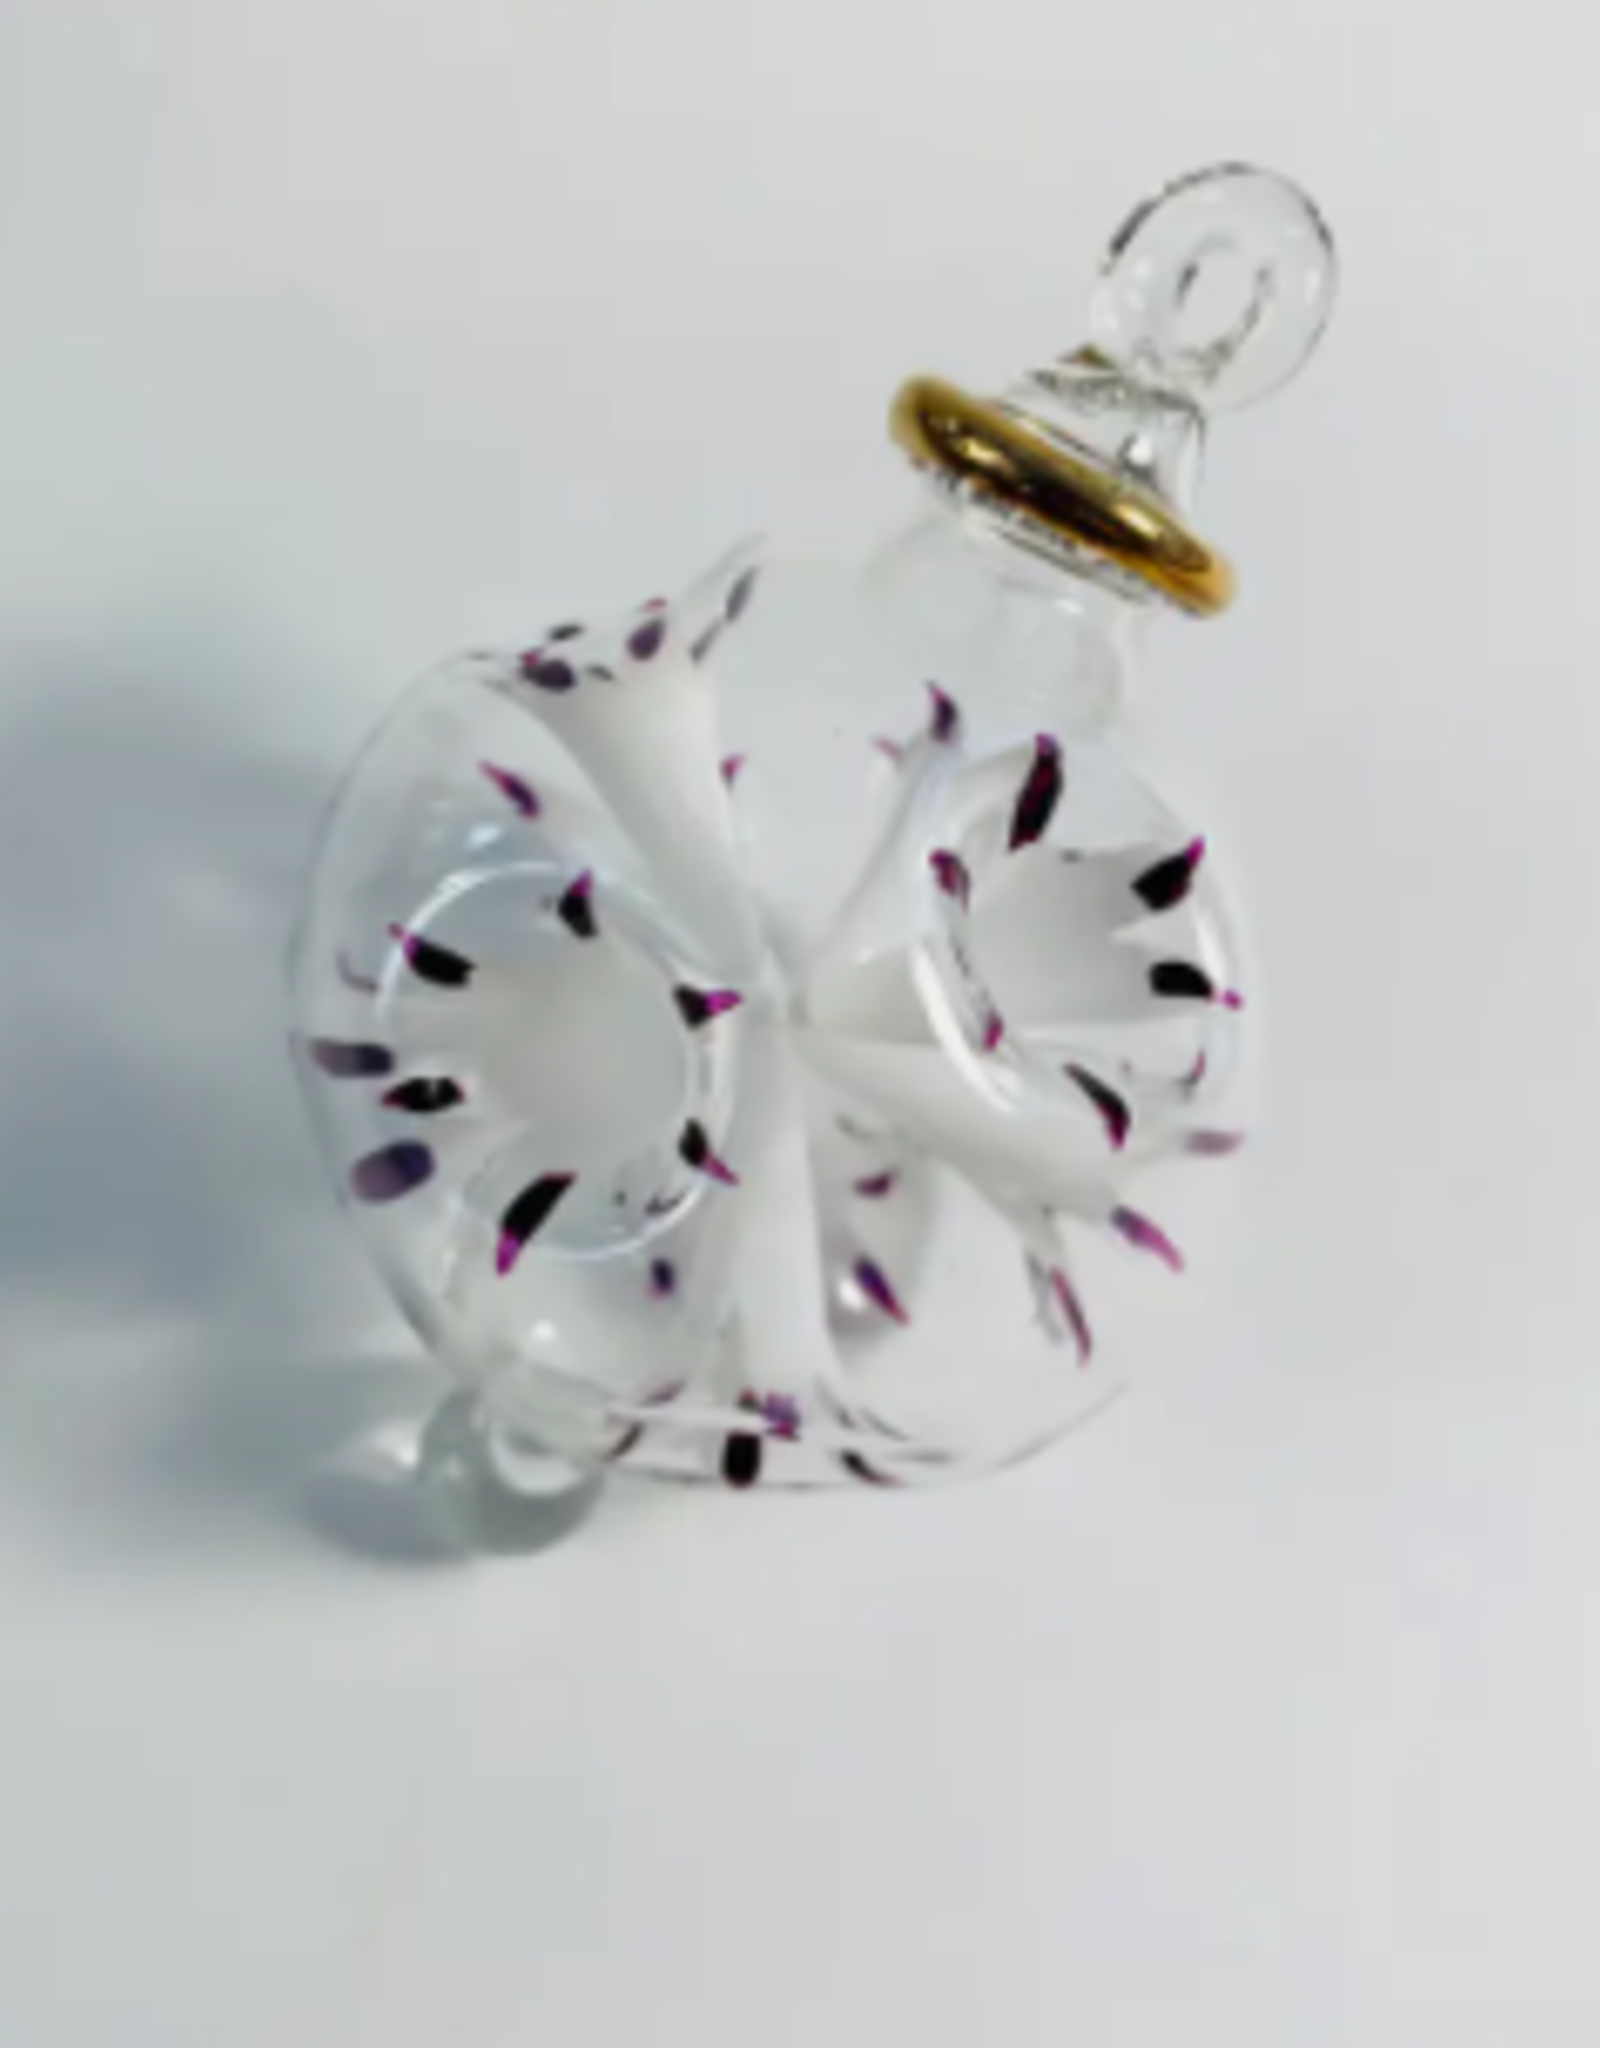 Dandarah Small Blown Glass Ornament - Mauve & White Blossoms